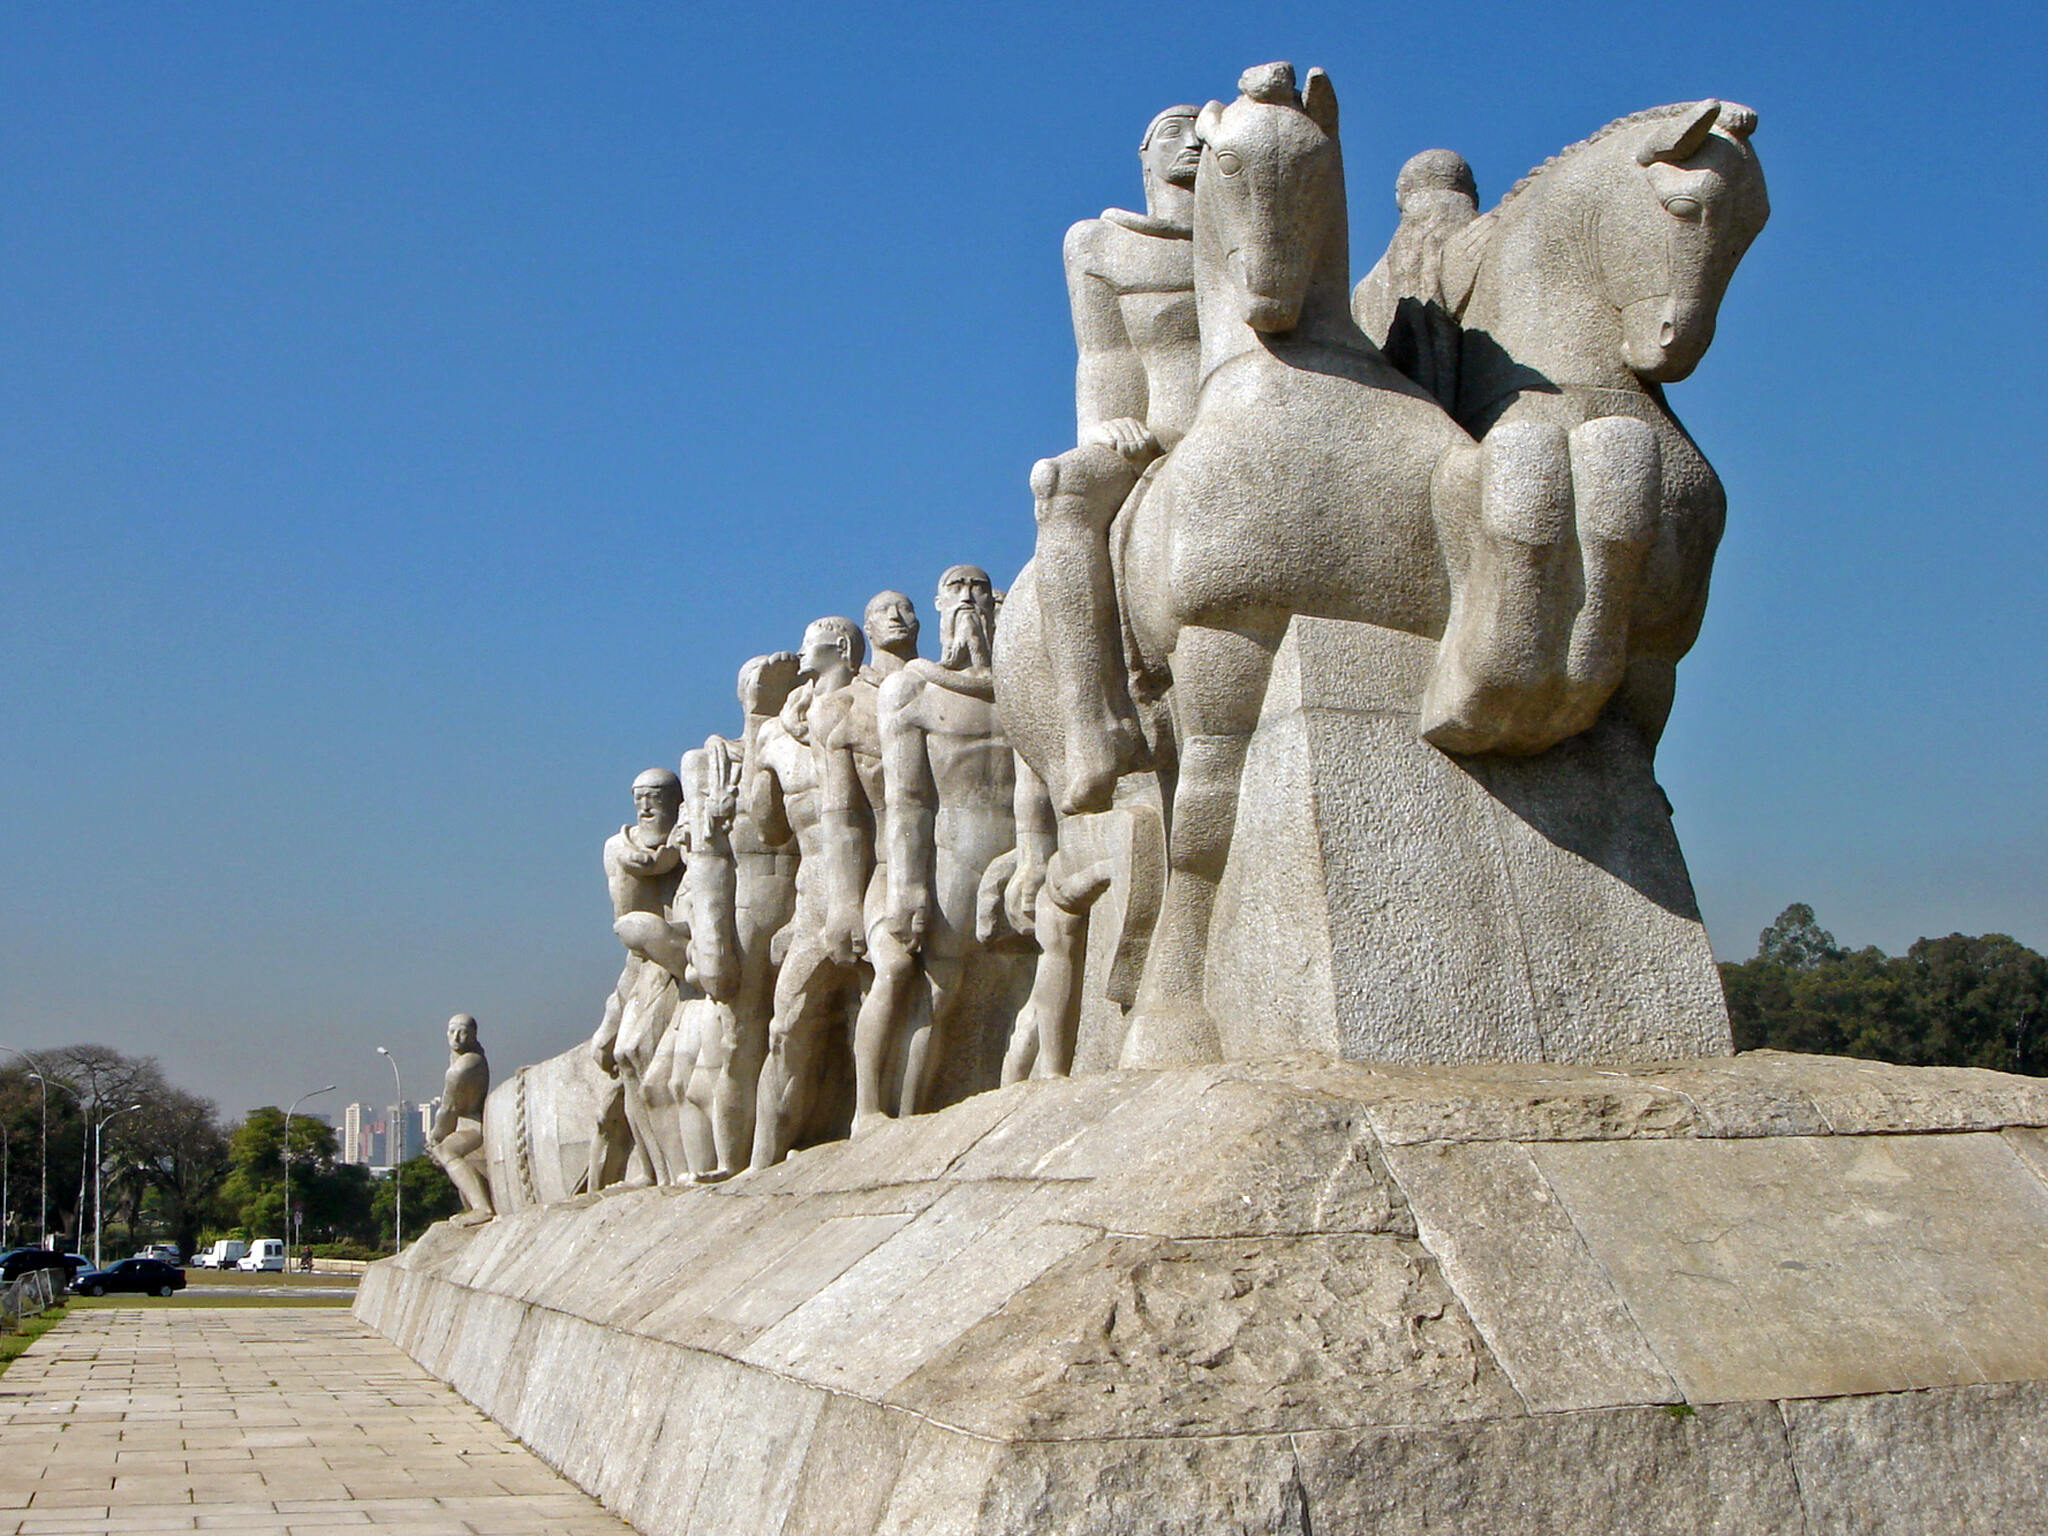 Monumento Bandeirantes, São Paulo, Brazil